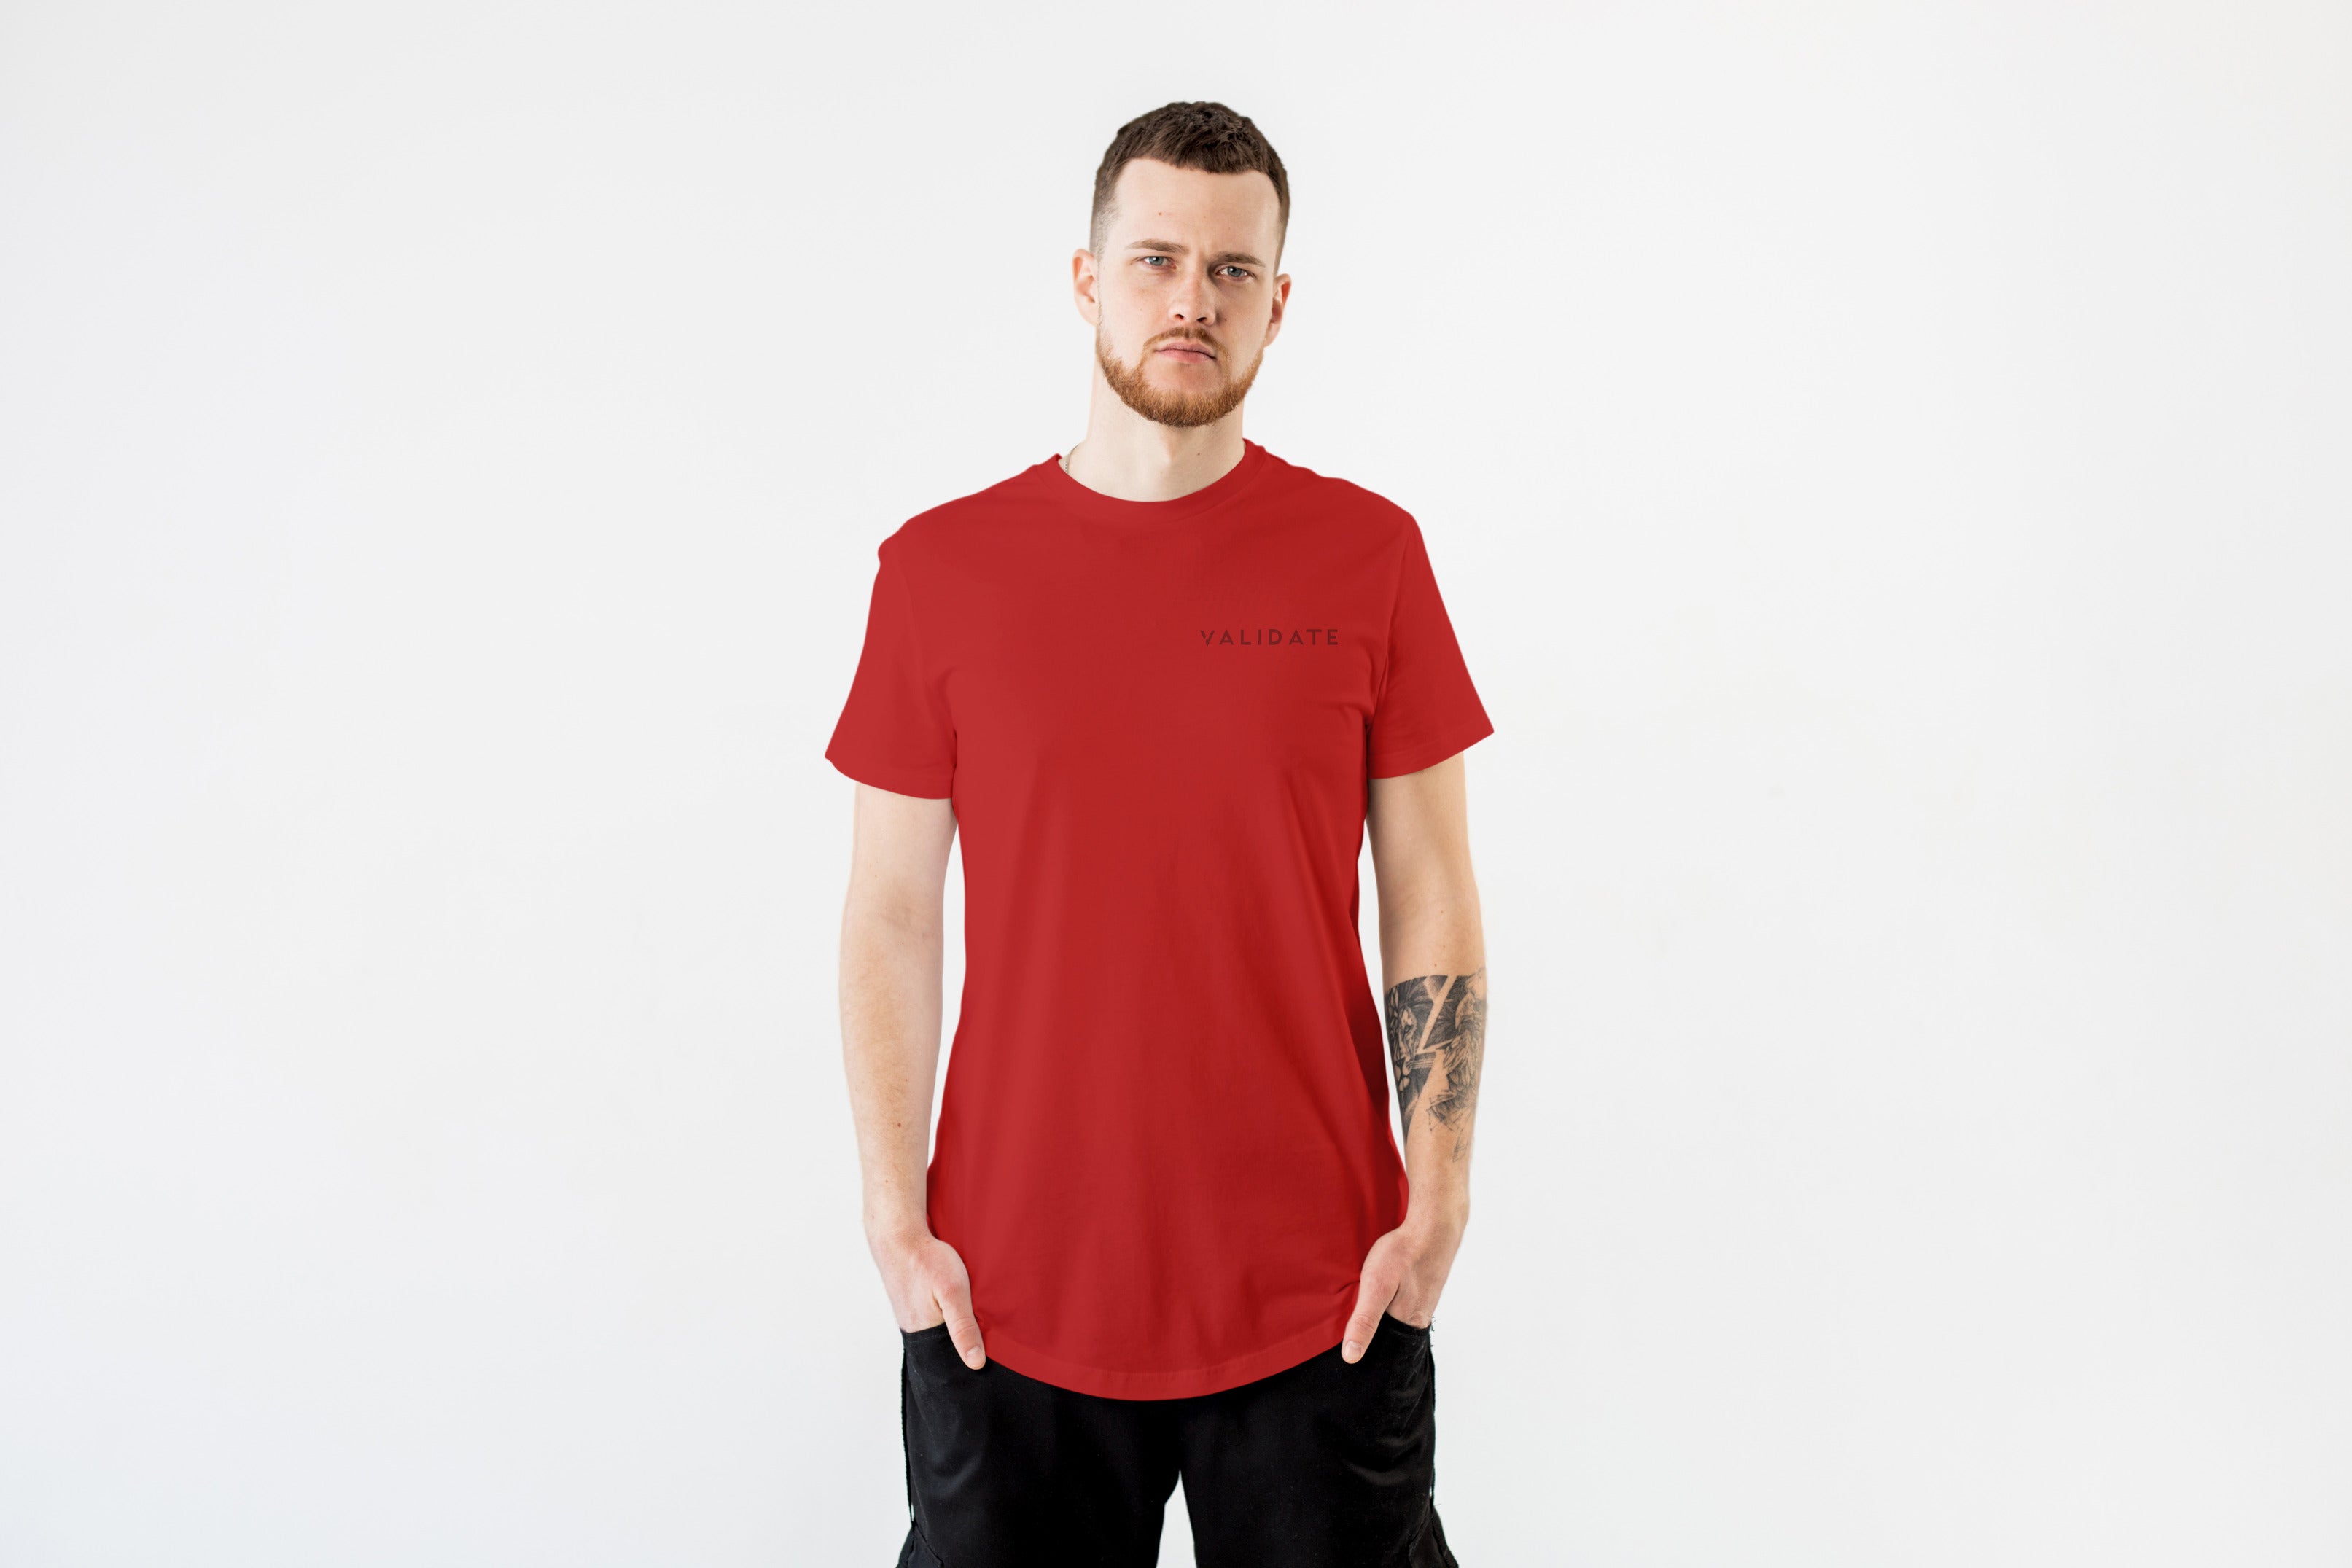 Validate Core Essentials Men's T-Shirt Red